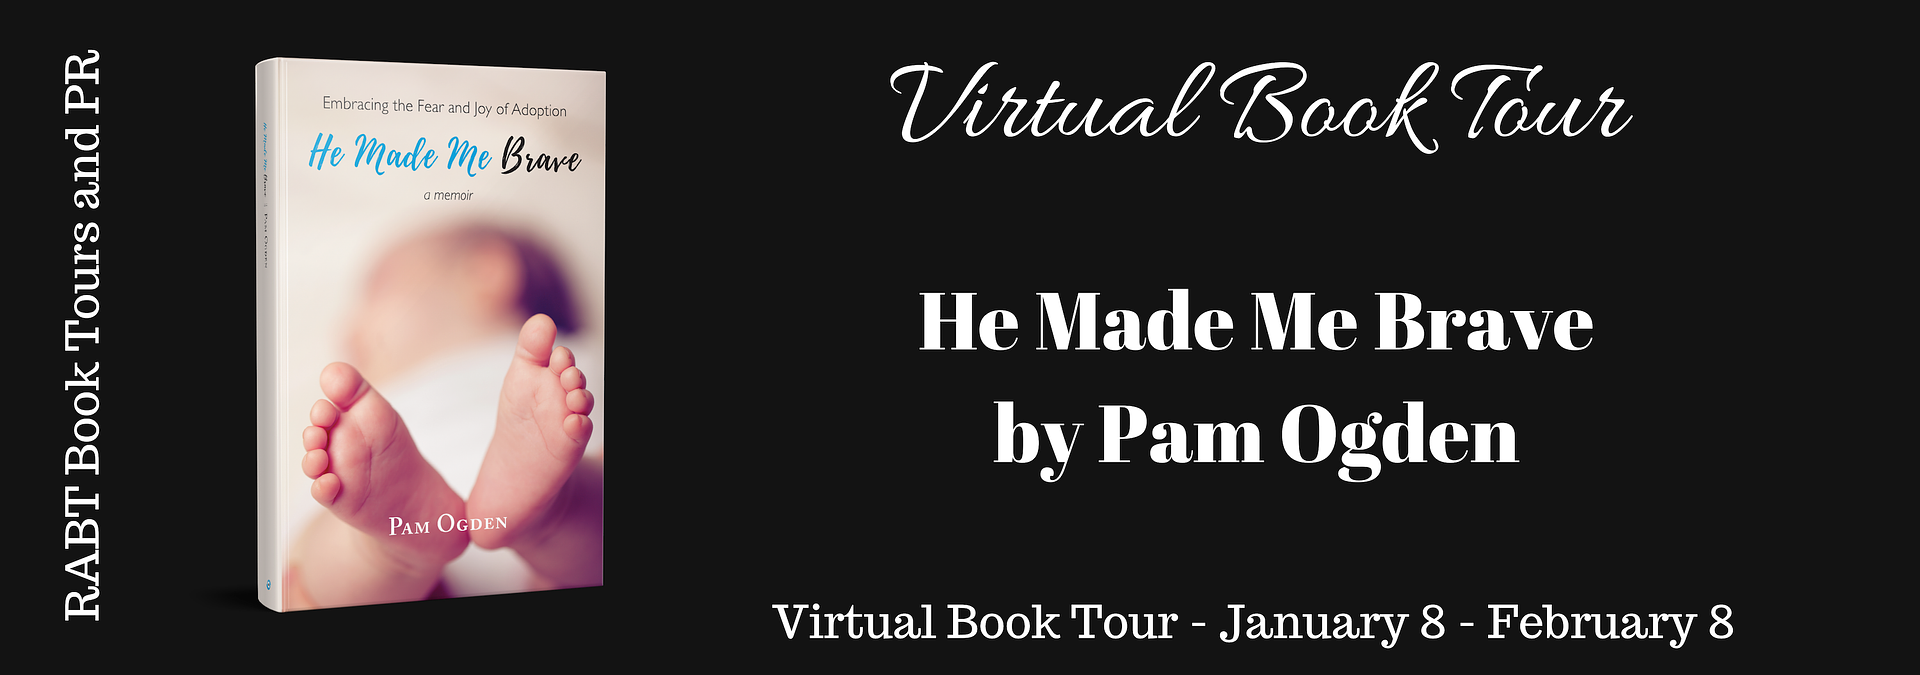 Virtual Book Tour: He Made Me Brave by Pam Ogden @Pam__Ogden #interview #nonfiction #parenting #christian @RABTBookTours